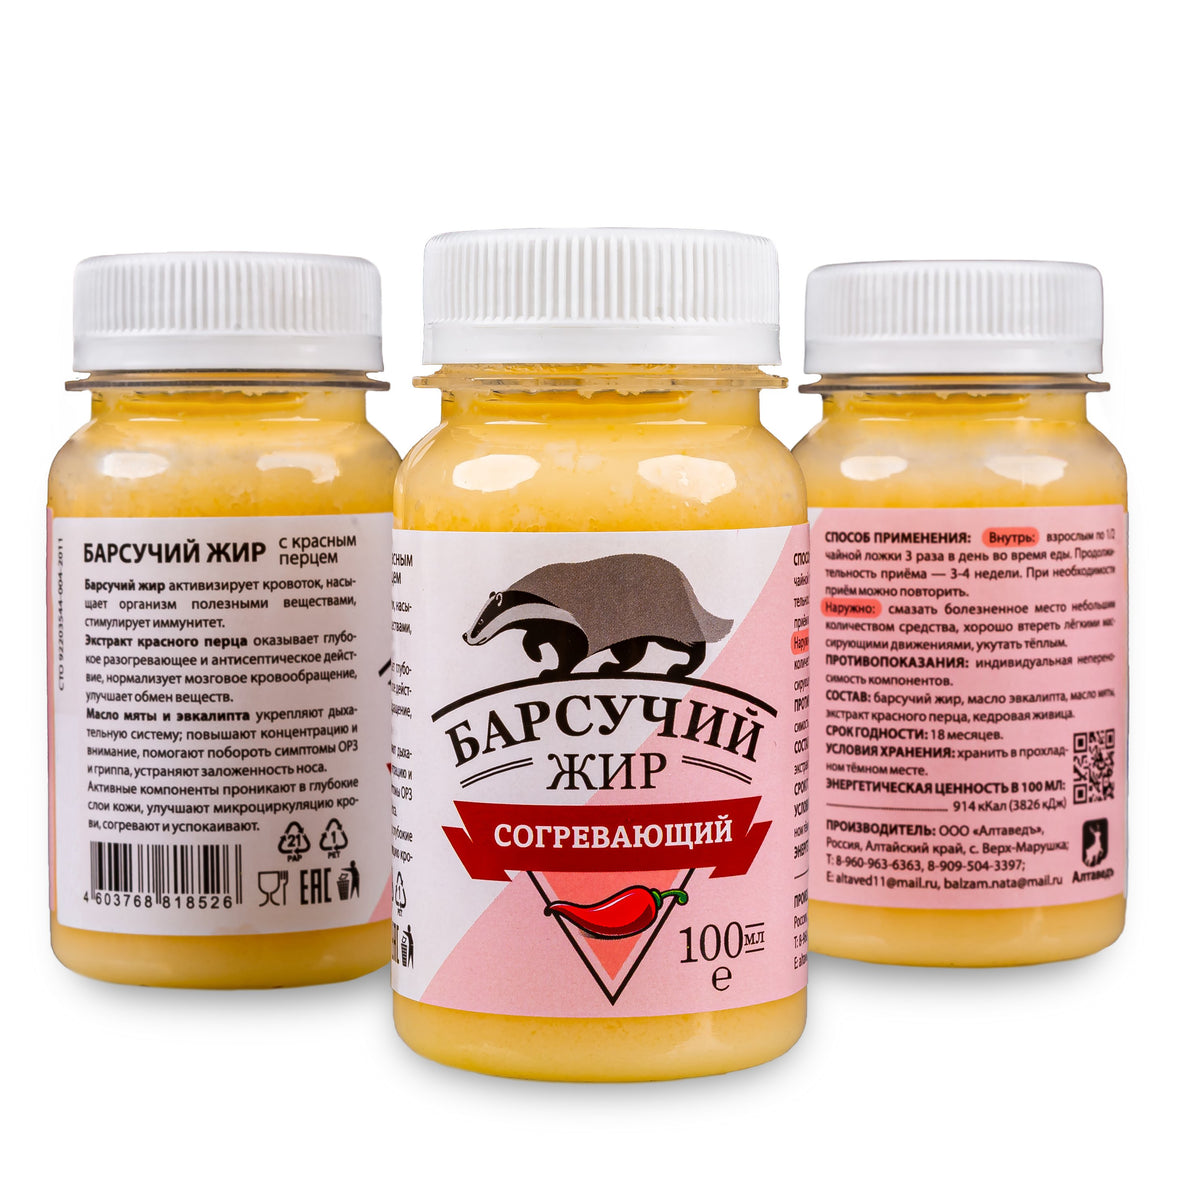 Cream-Gel “Badger Fat” Siberian Warming with Eucalyptus, Mint Essential Oils, Red Pepper 100ml